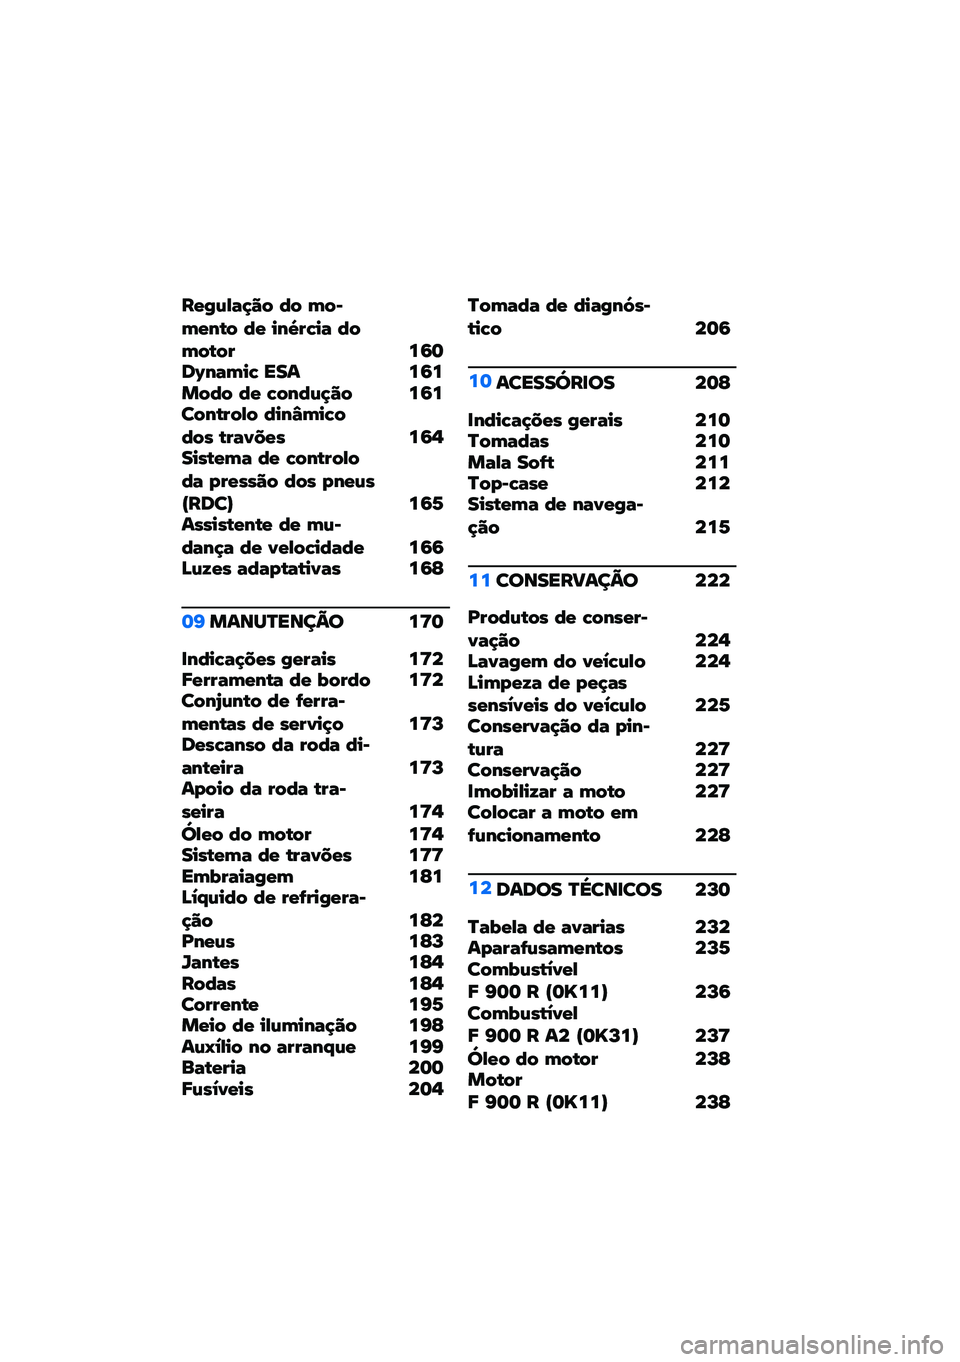 BMW MOTORRAD F 900 R 2020  Manual do condutor (in Portuguese) ��"�!�*�$��;��  �4�  �.� ��.�"�1�)�  �4�" ��1�5�#�6�� �4� �.� �)� �# ��7��	�T�1��.��6 ���\f ��7��� �4�  �4�" �6� �1�4�*�;��  ��7��� �1�)�#� �$�  �4��1�Z�.��6� �4� � �)�#��(�K�"